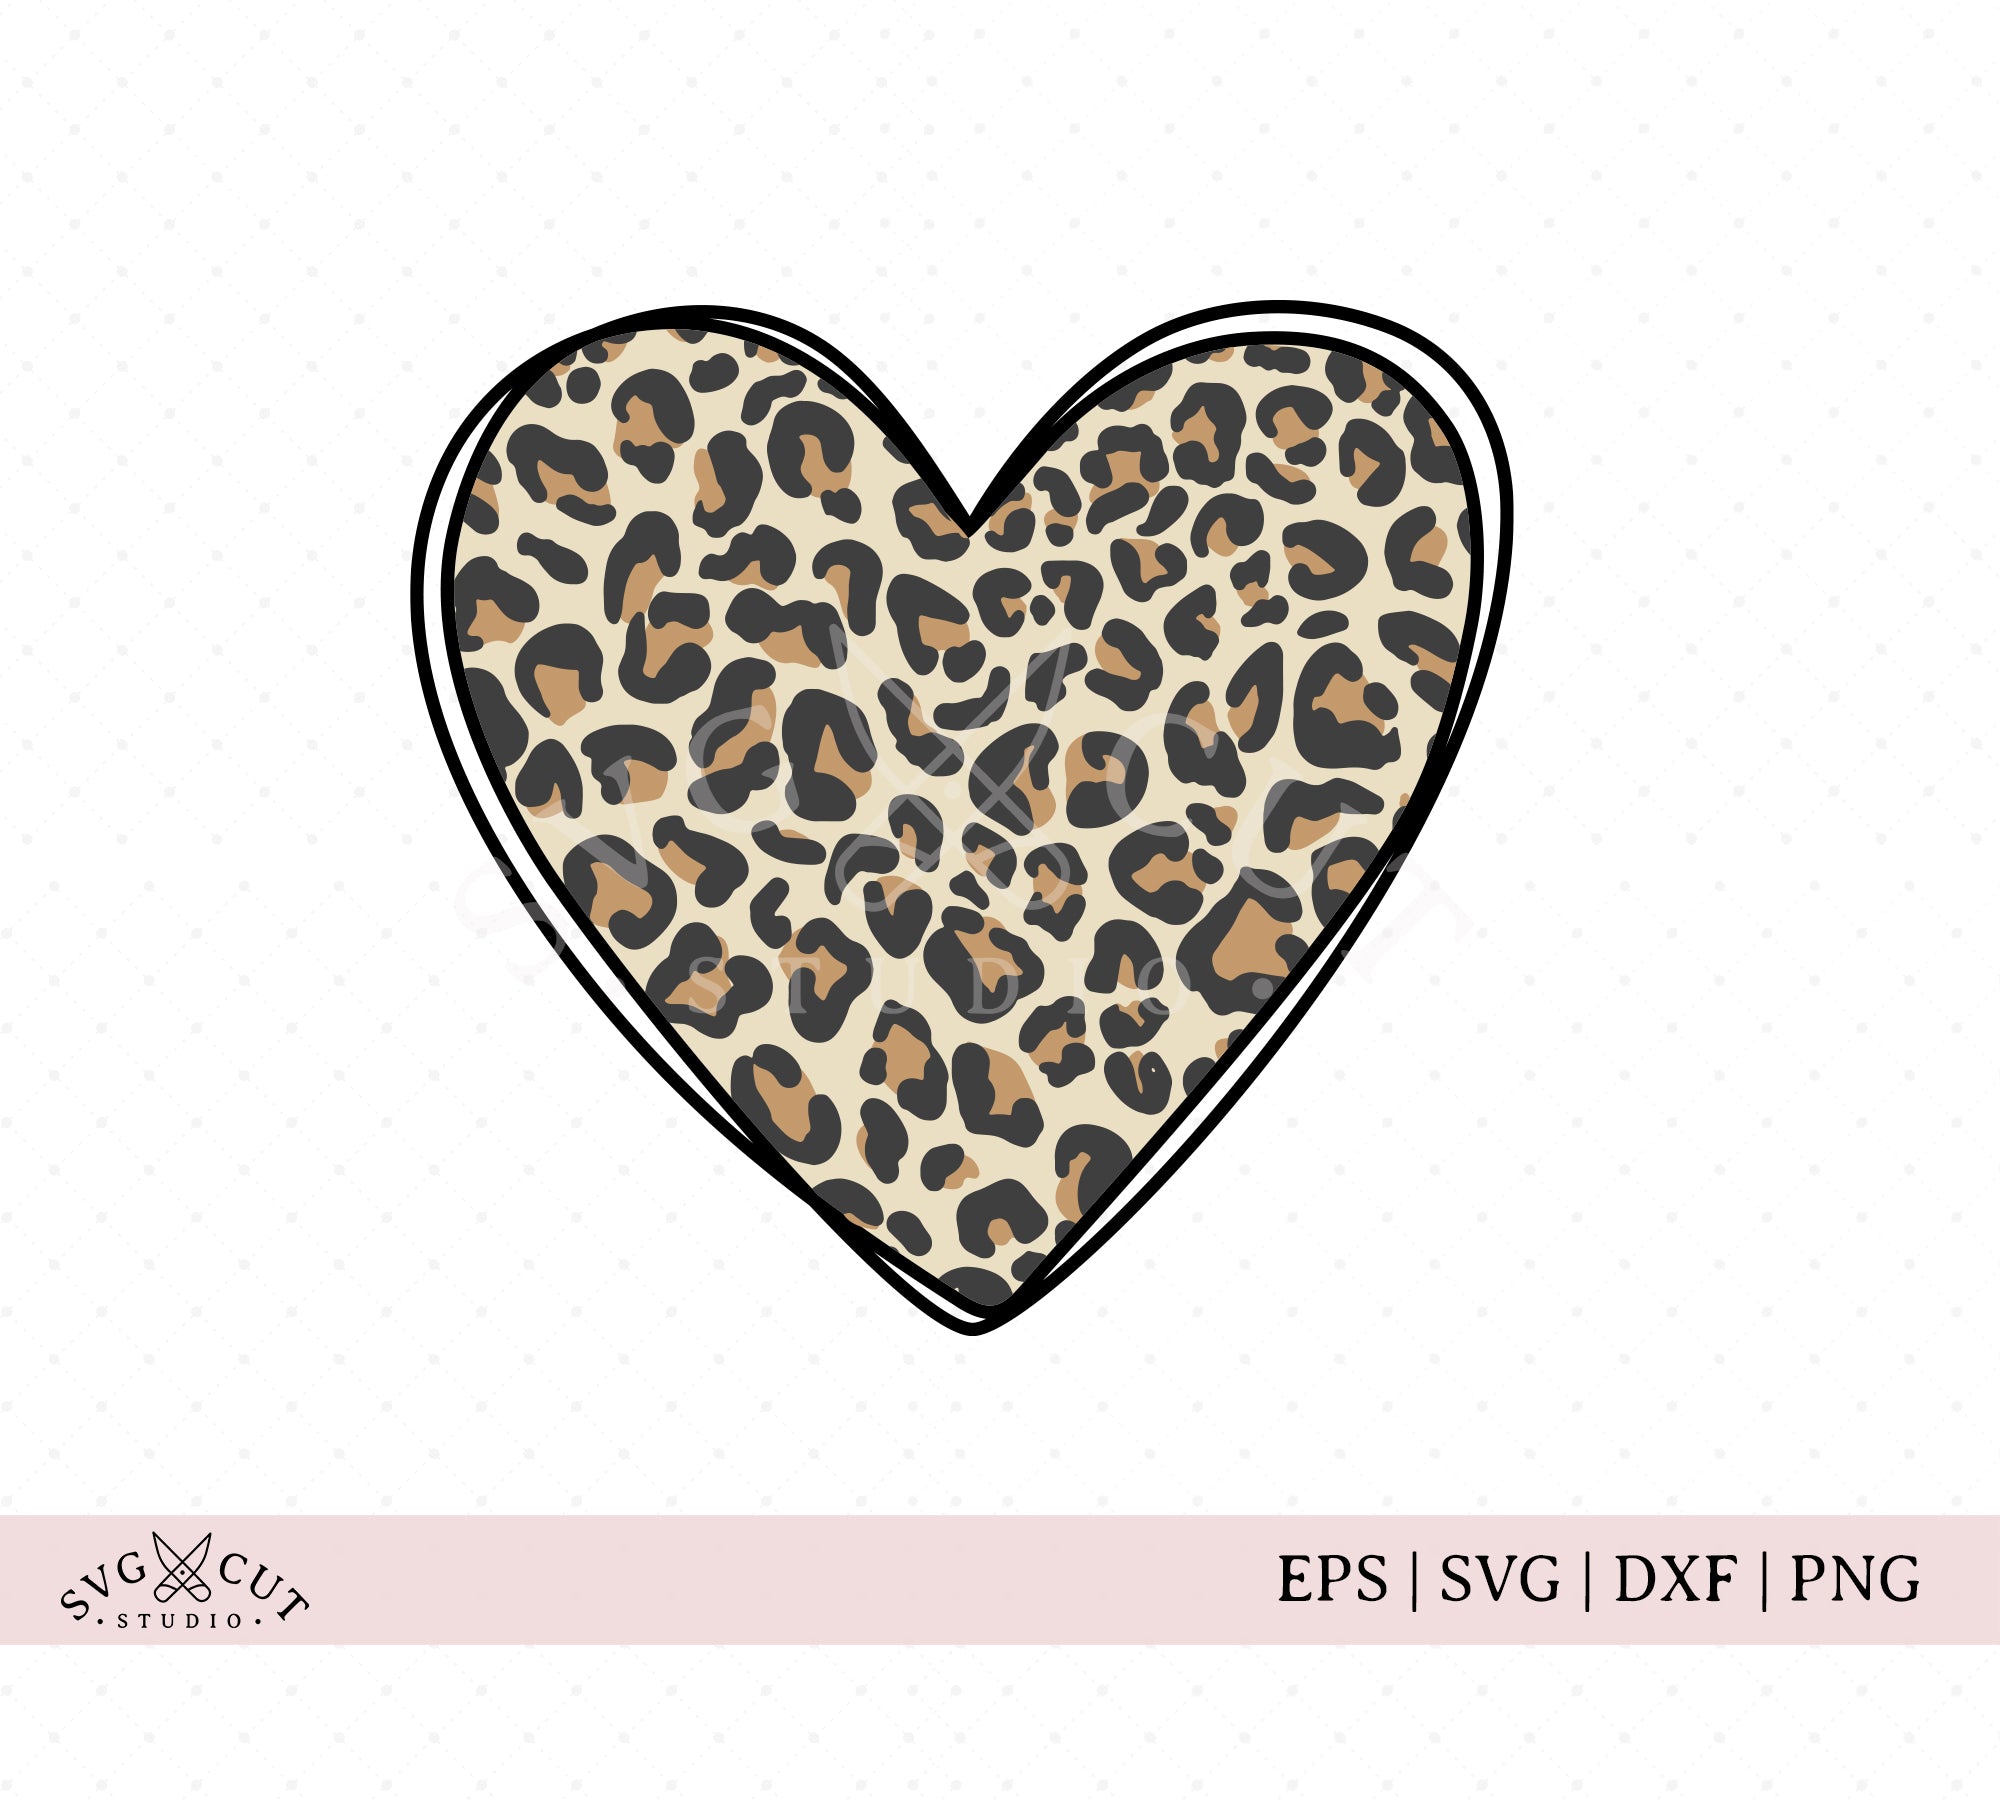 Leopard Heart Svg, Leopard Hand Drawn Heart Svg, Cheetah Spots Svg. Cut  File Cricut, Silhouette, Png Pdf Eps, Vector, Vinyl, Sticker, Decal - Clip  Art Library